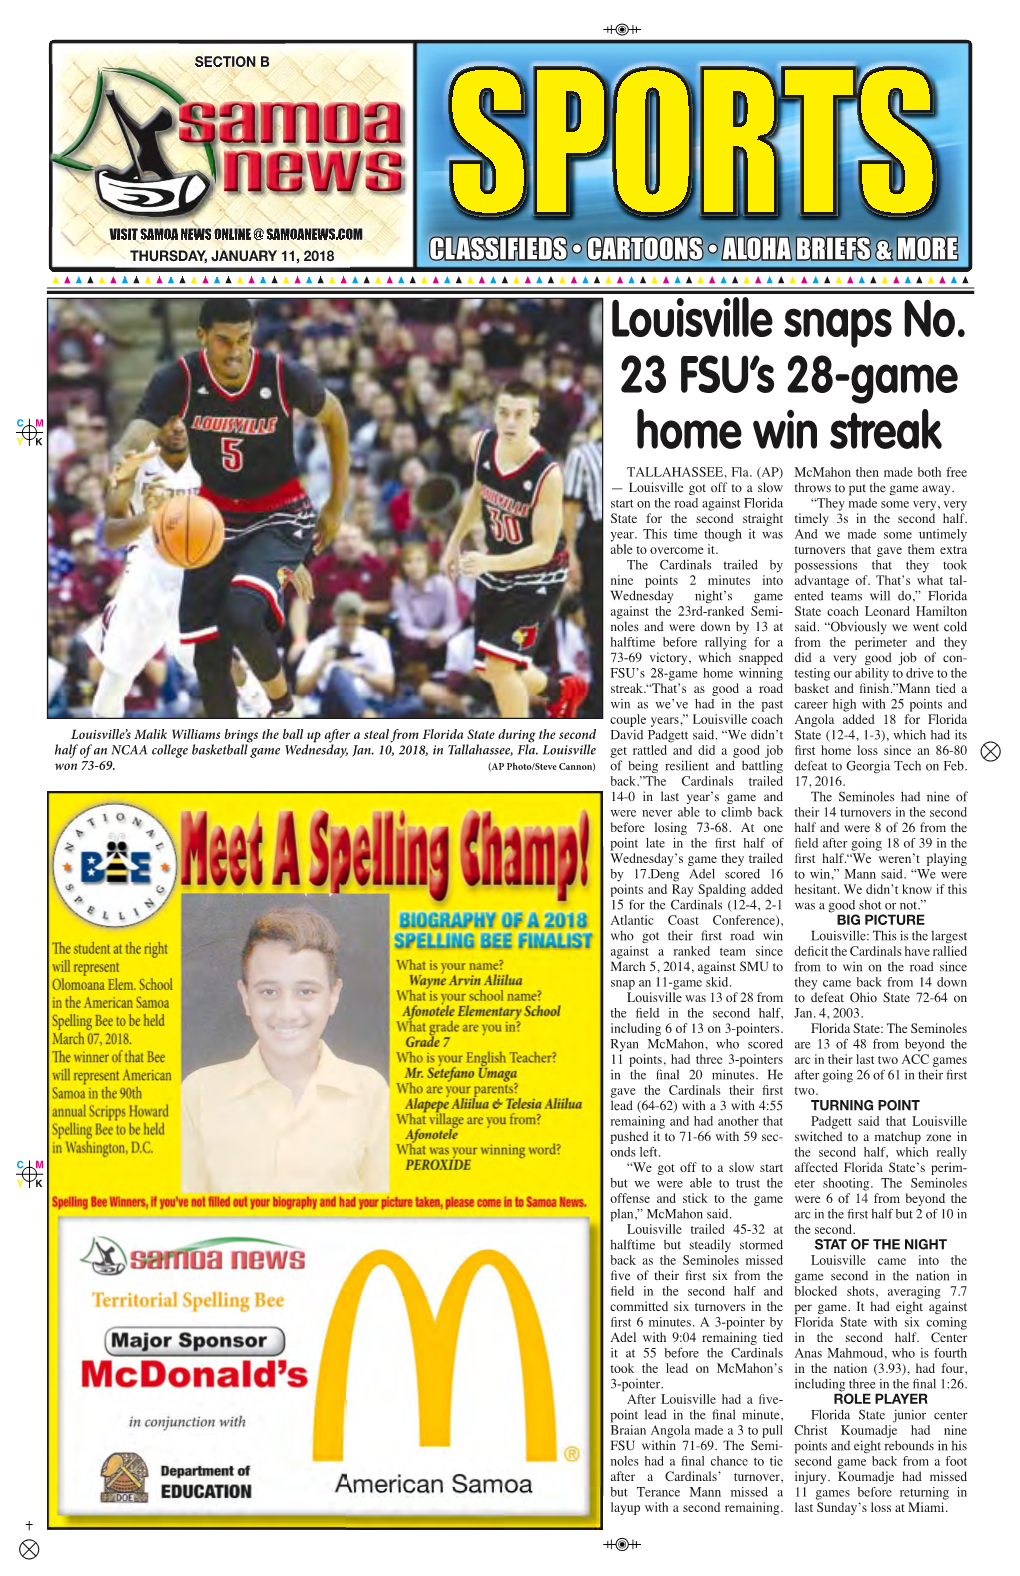 Louisville Snaps No. 23 FSU's 28-Game Home Win Streak